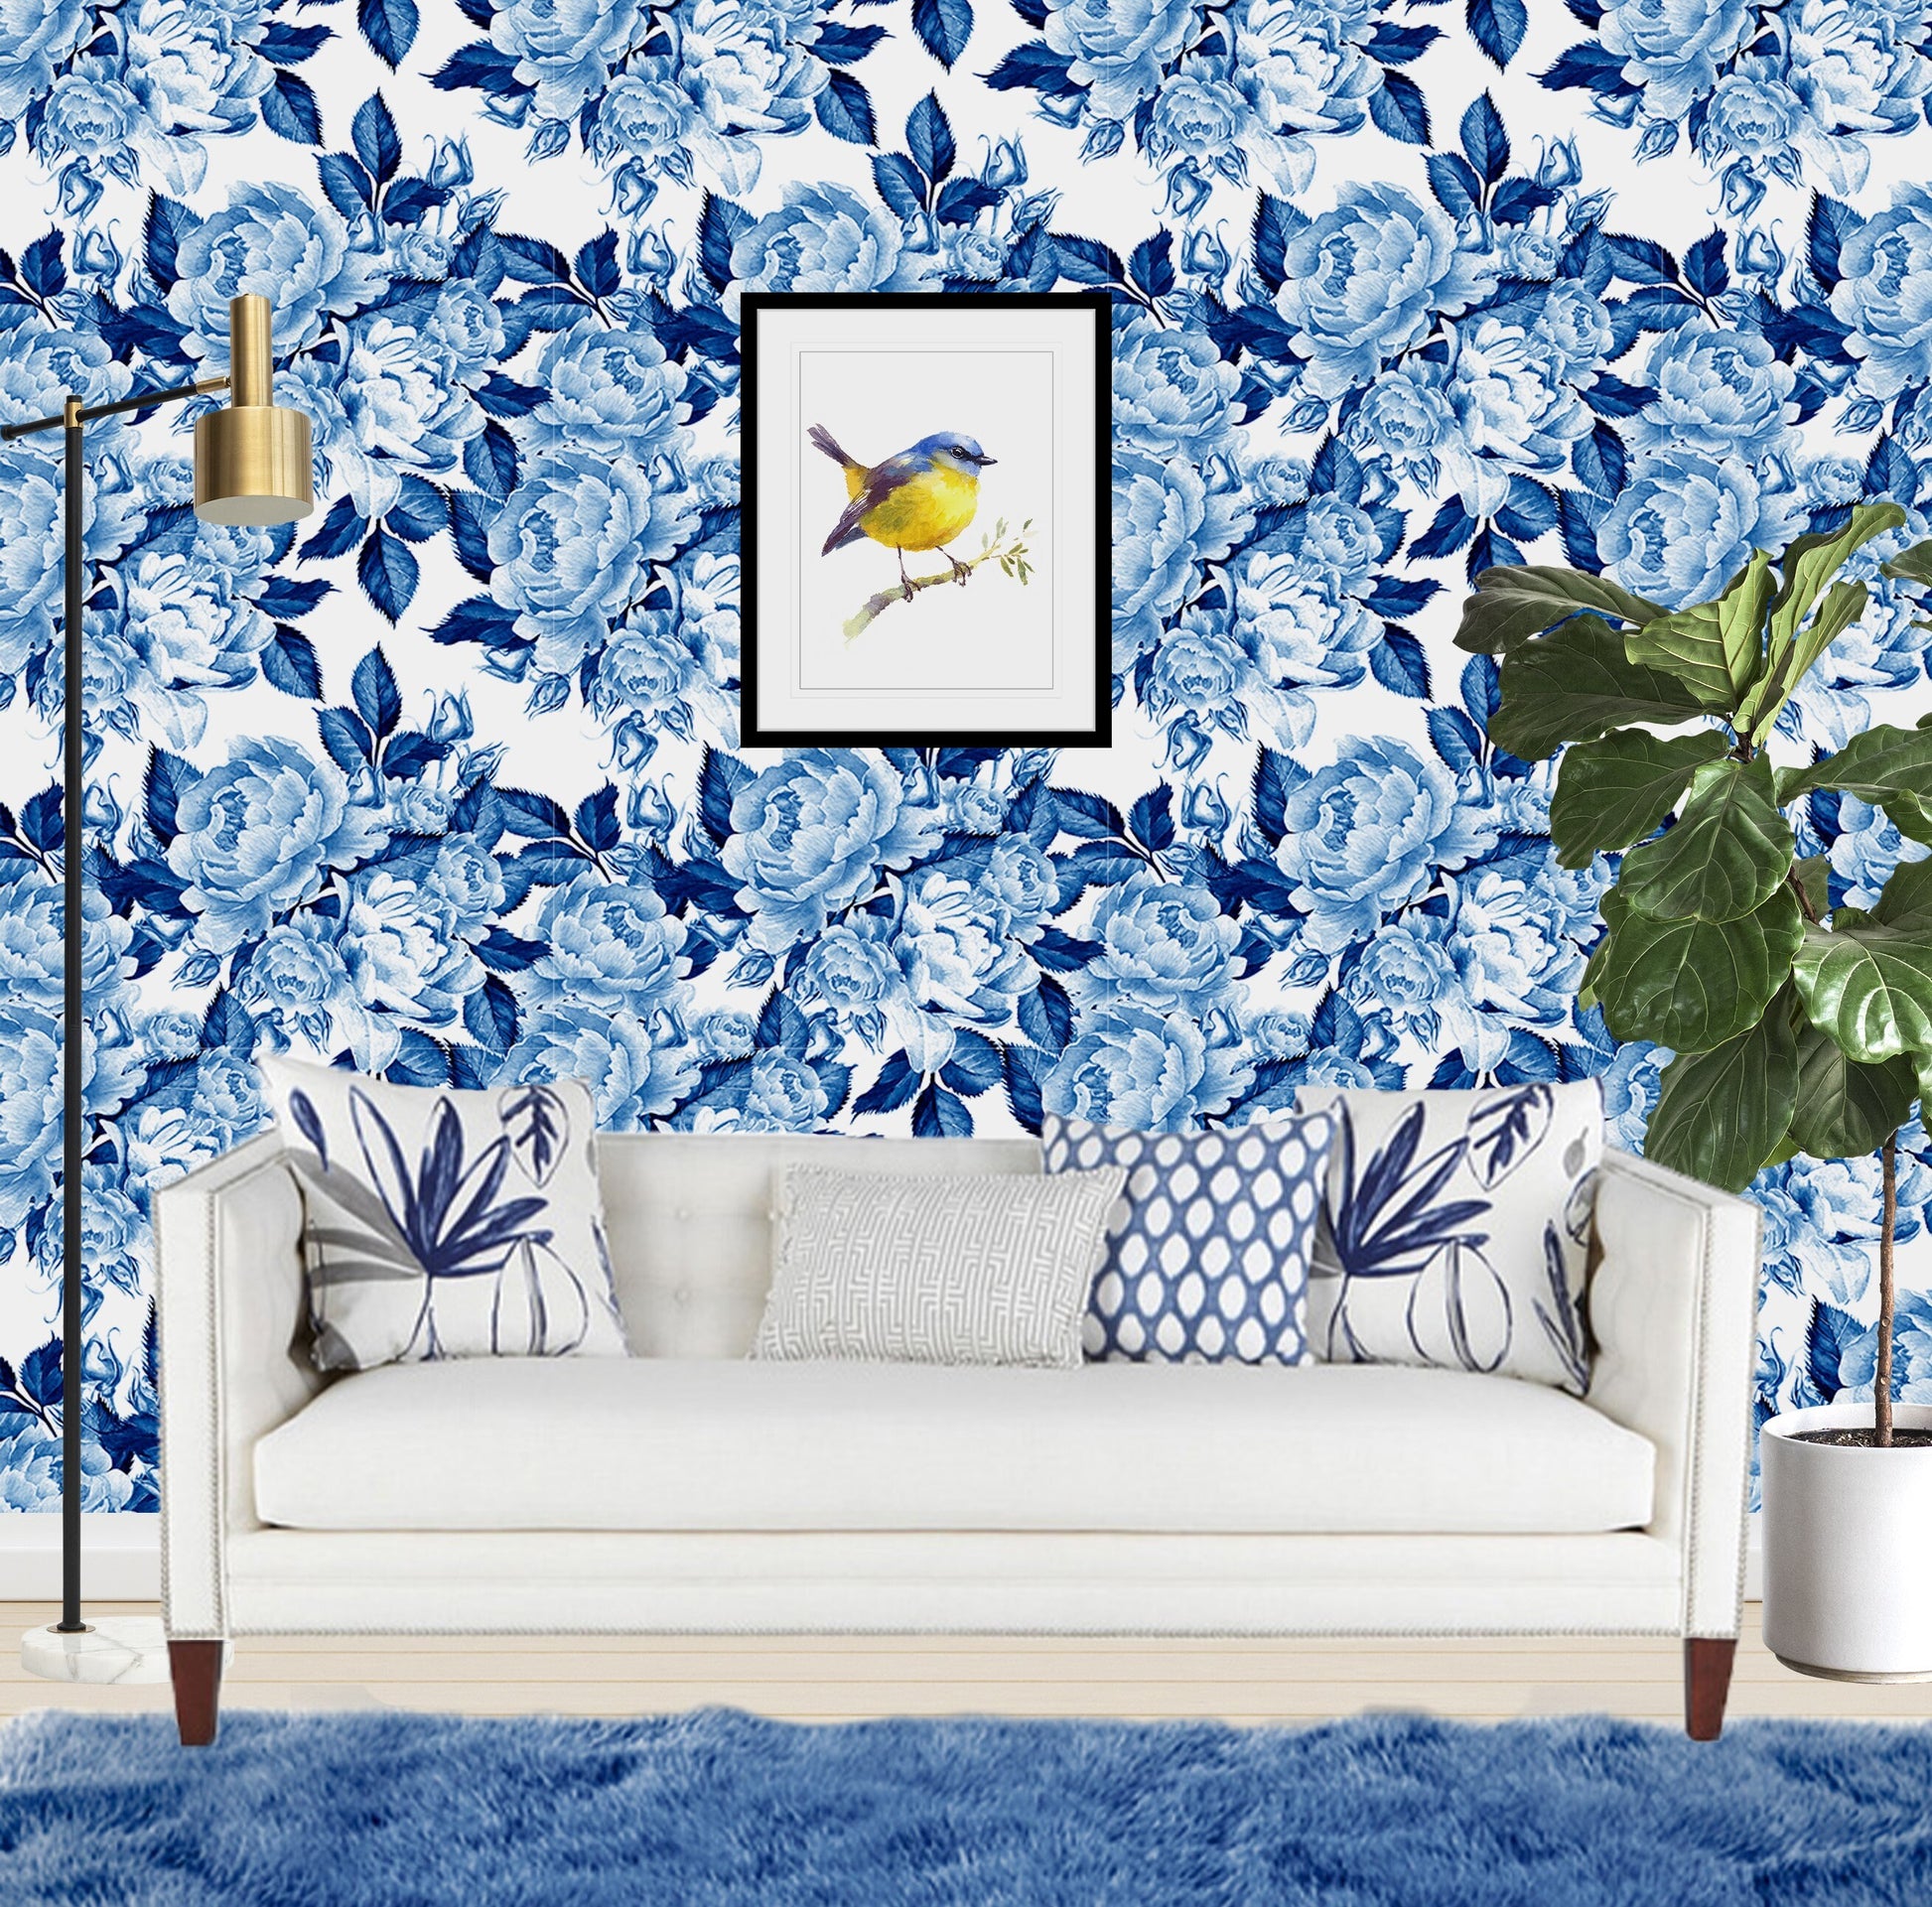 Blue Rose Wallpaper Peel and Stick, Blue Floral Wallpaper, Peony Wallpaper, Removable Wall Paper